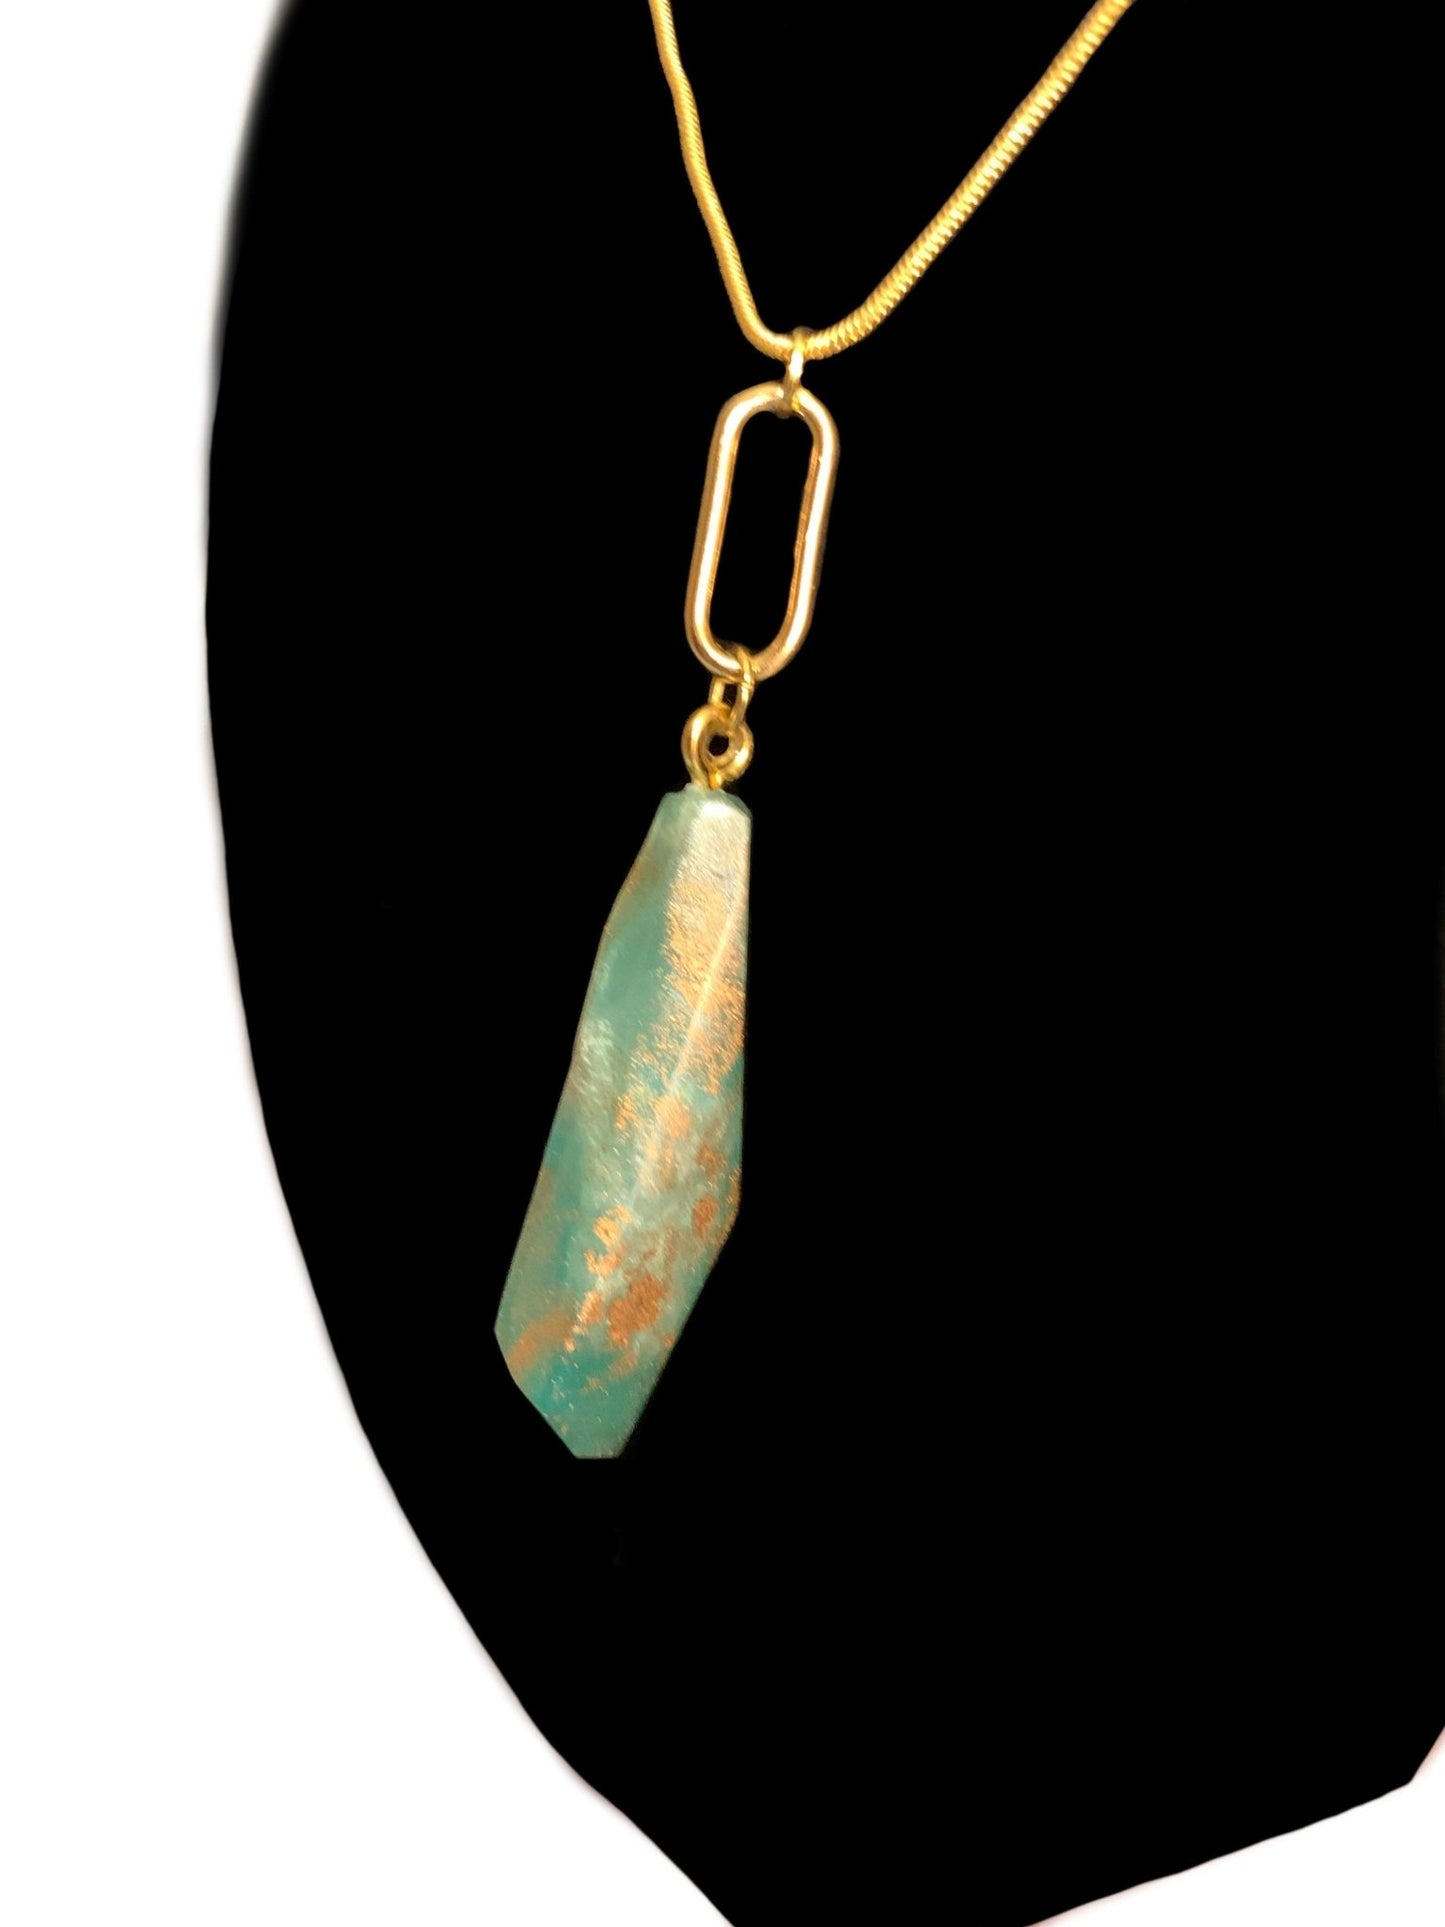 🔴SOLD🔴 Caribbean Sea Handmade Resin Crystal Pendant on Gold Plated Chain - Born Mystics